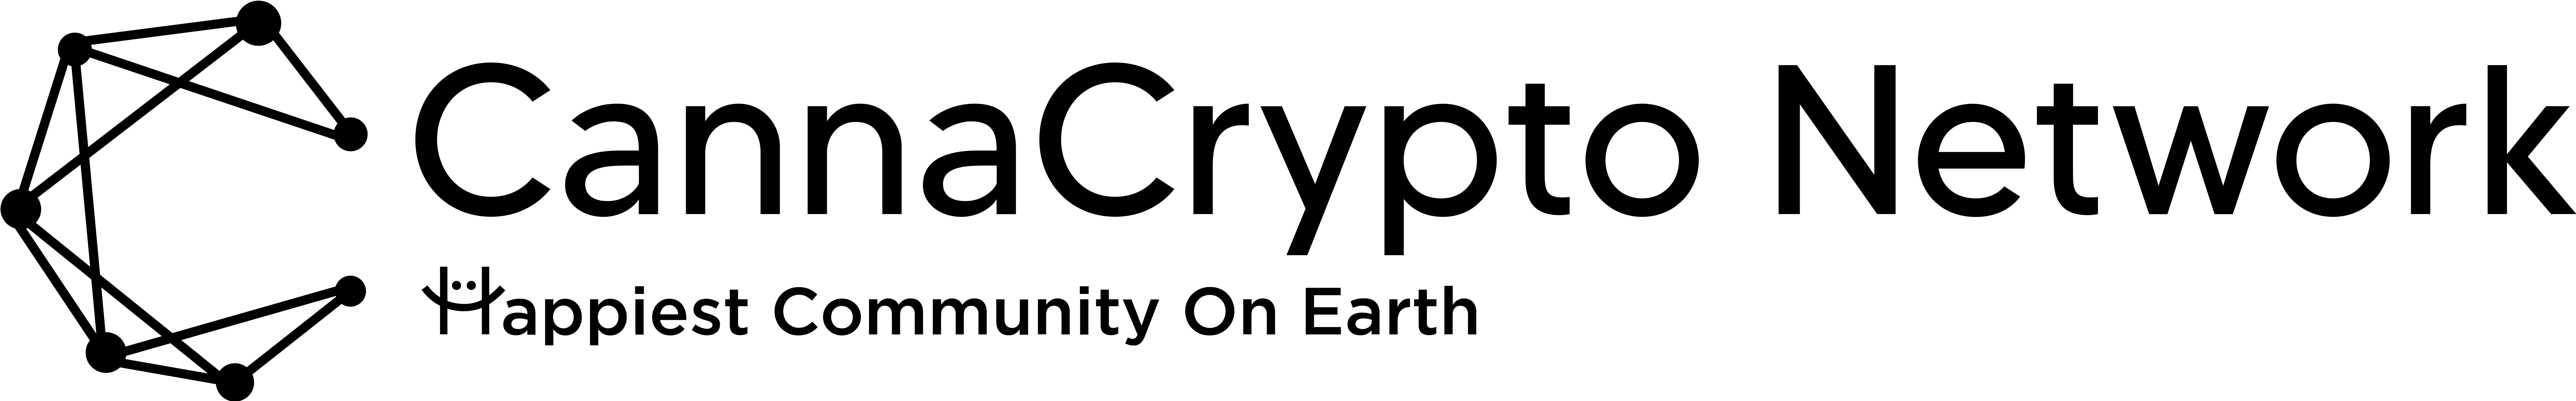 CannaCrypto Network Logo Black Transparent 1